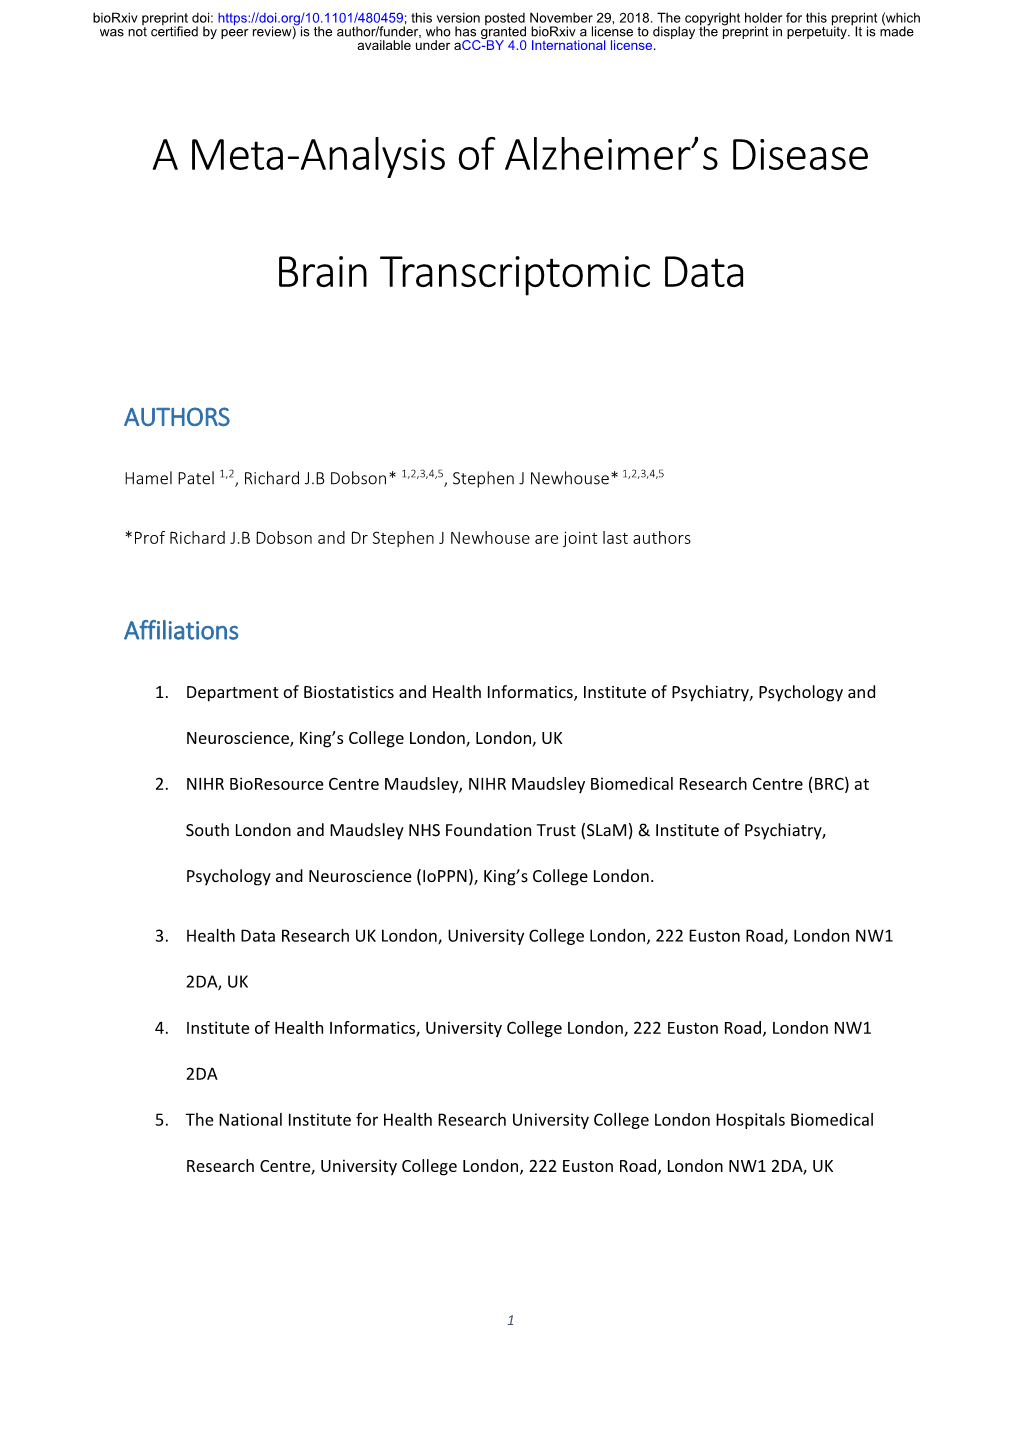 A Meta-Analysis of Alzheimer's Disease Brain Transcriptomic Data